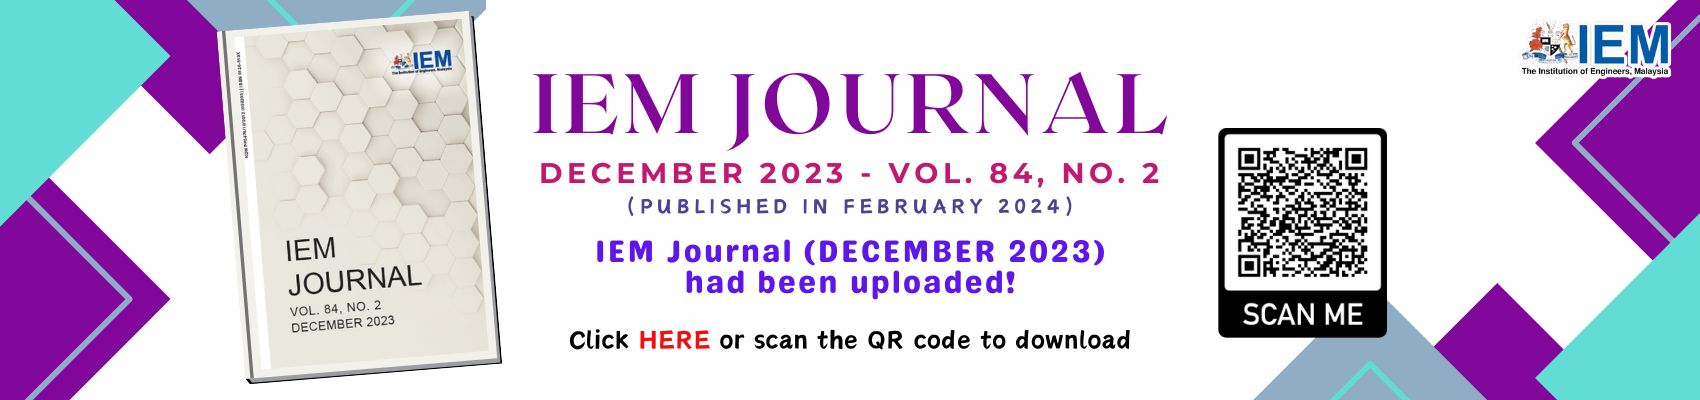 IEM Journal 2023